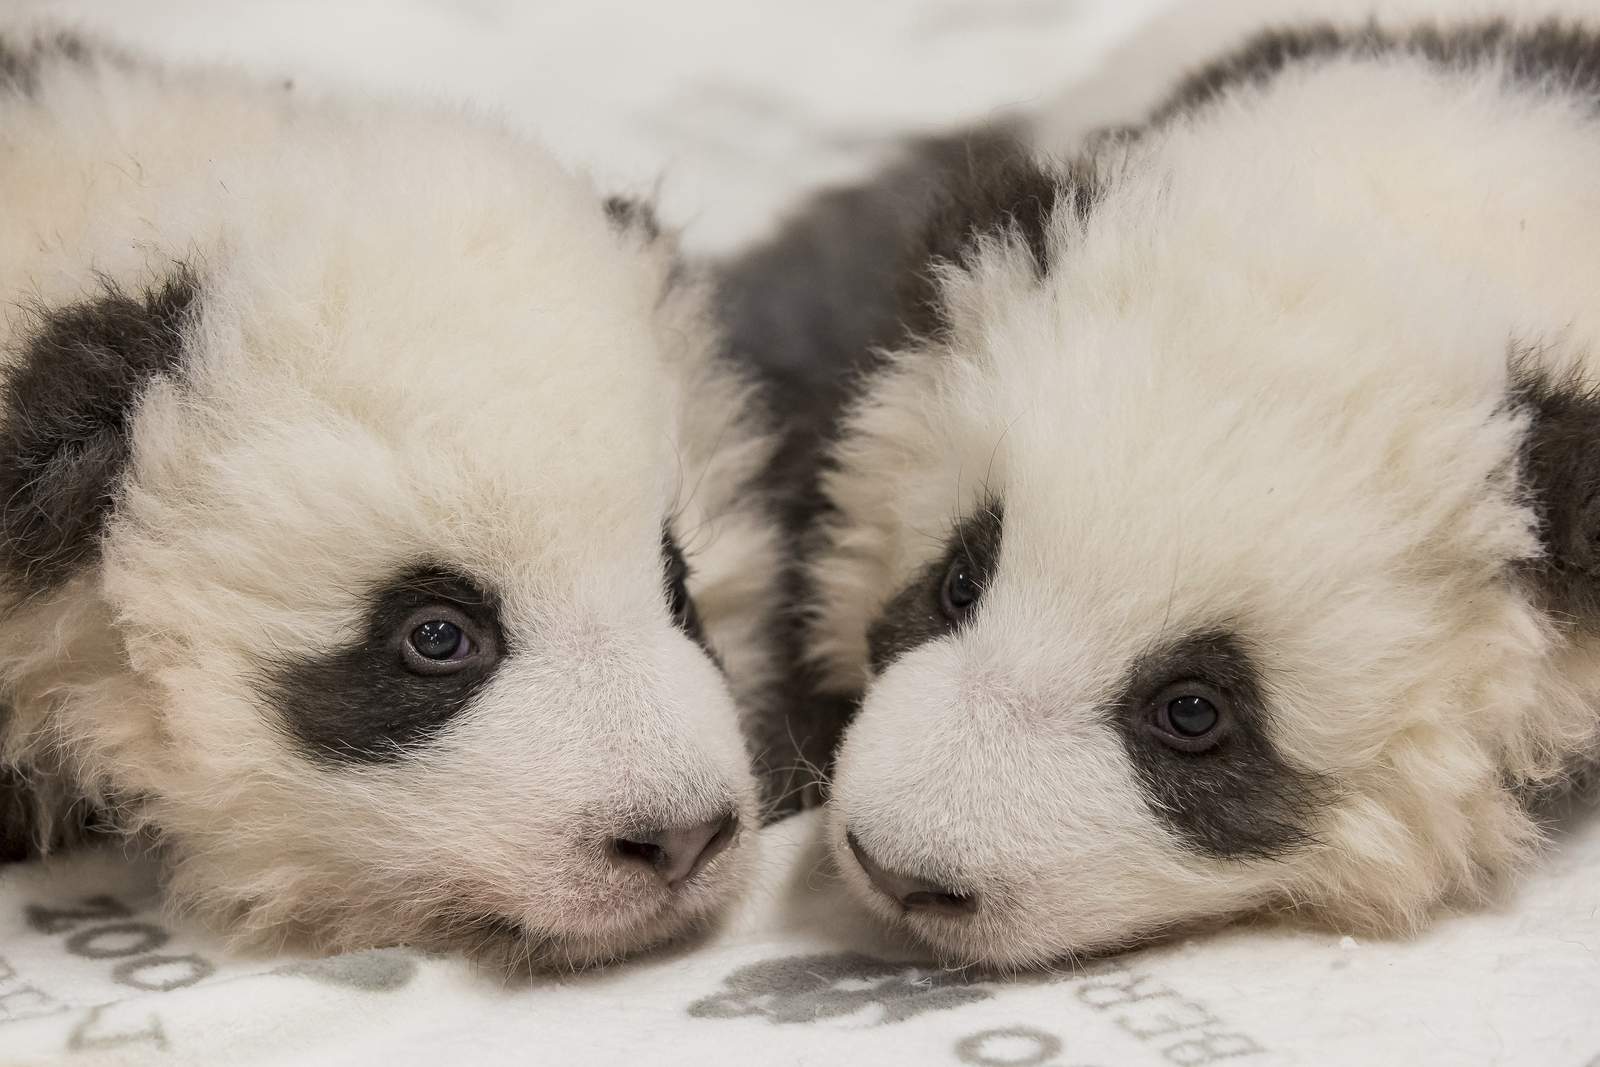 Twice as cute: Berlin zoo releases new photos of panda twins